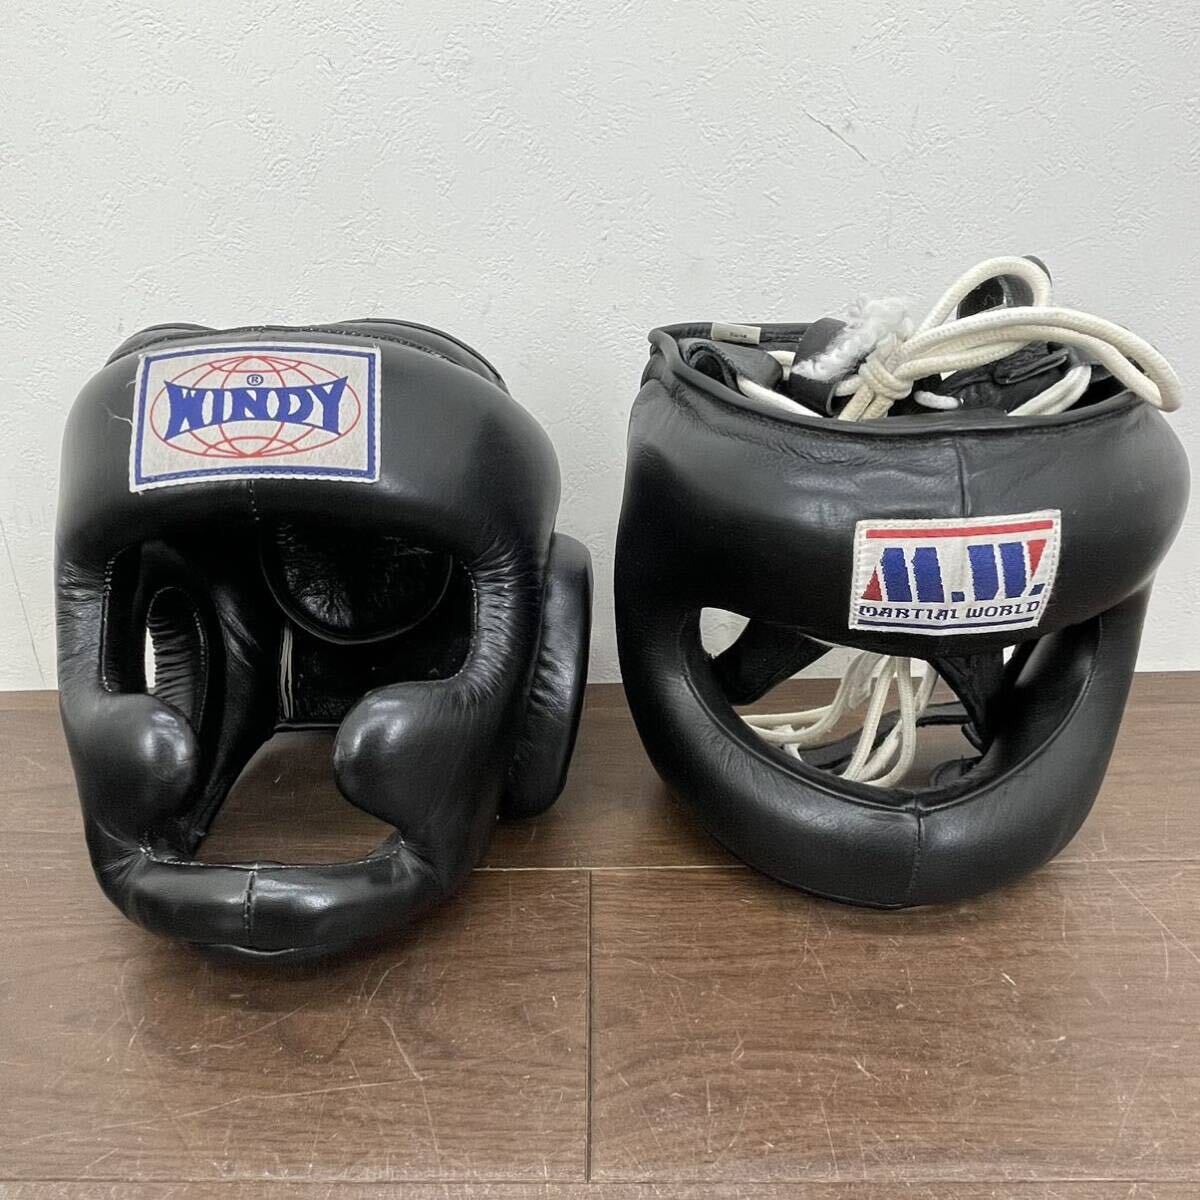 DDK15b ボクシング用品 まとめて パンチンググローブ キックミット ヘッドギア ヘッドガード 格闘技 ウィンディ ボディメーカー ウイニング